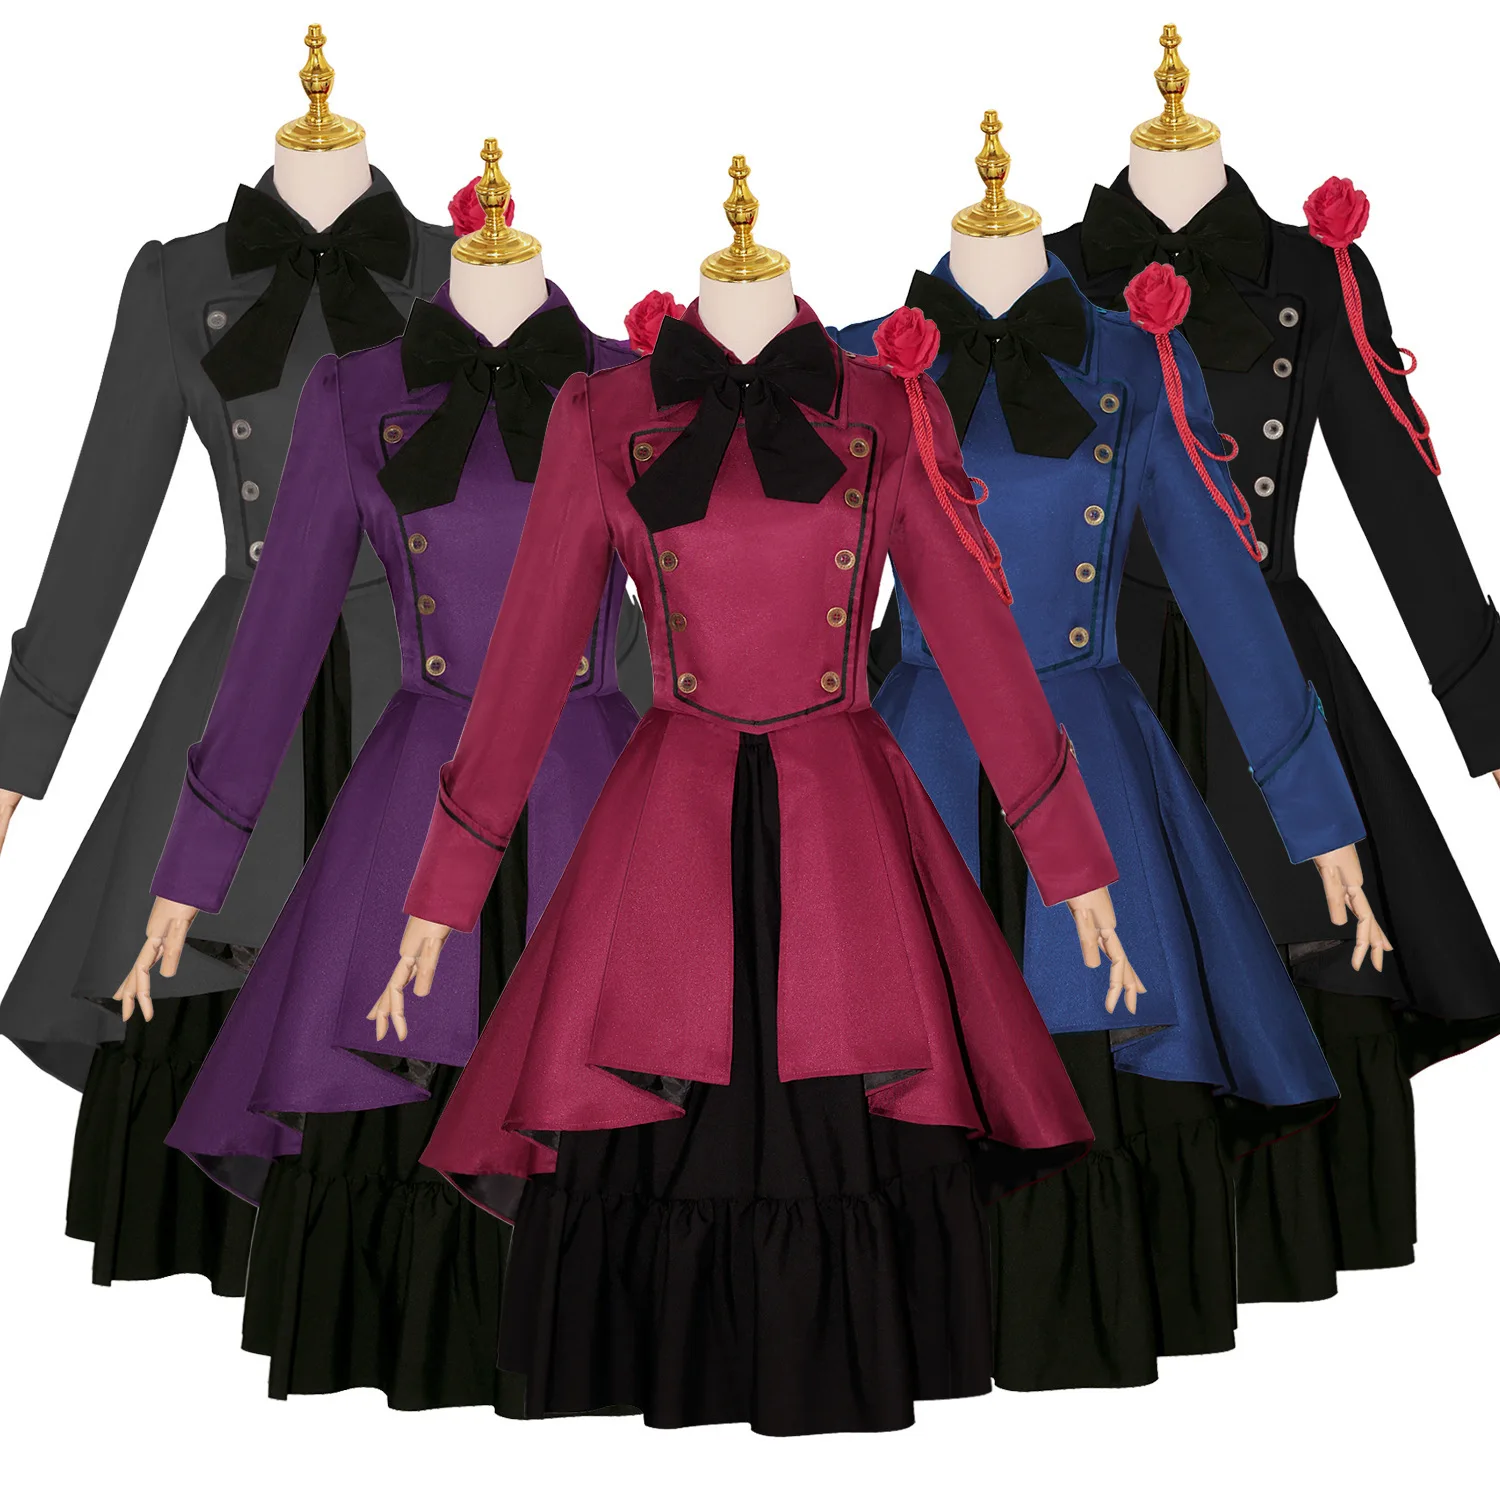 

Medieval Renaissance Retro Gothic Dress Long sleeved ruffled steam punk cosplay retro skirt